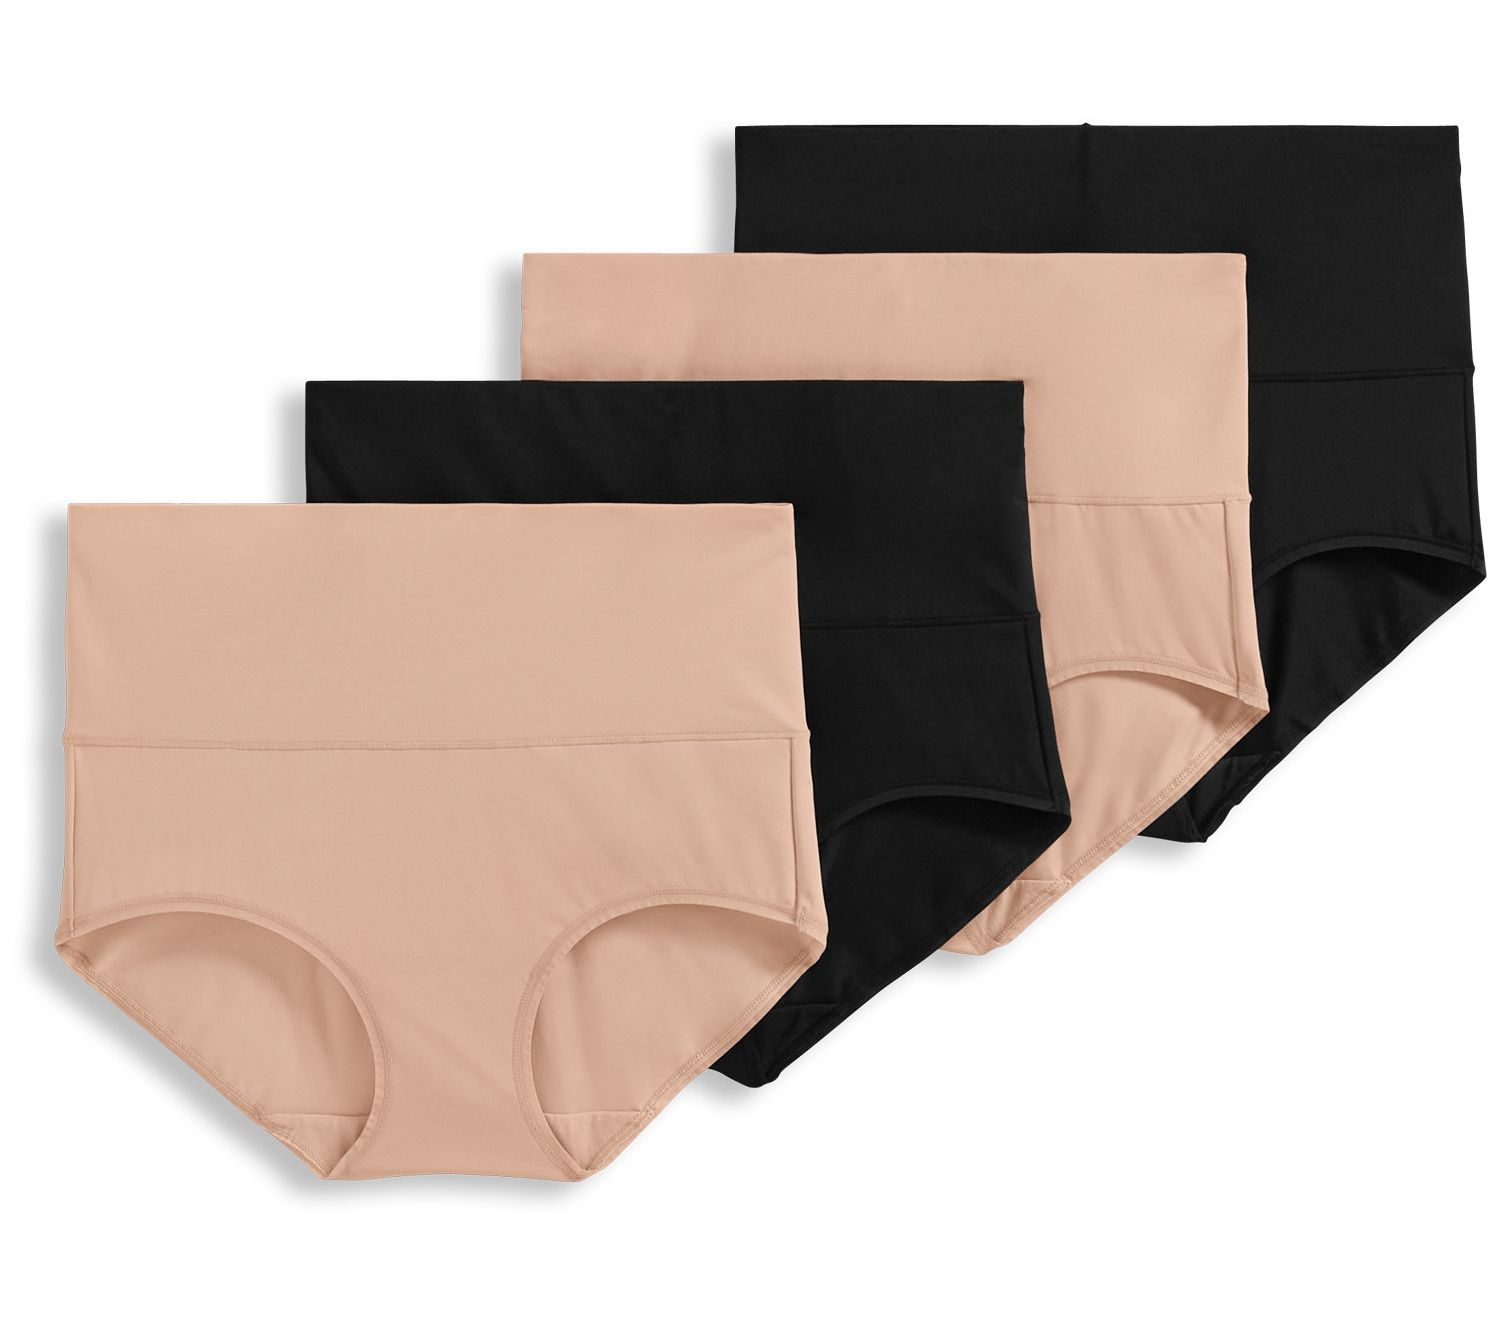  Jockey Womens Underwear Classic Brief - 6 Pack